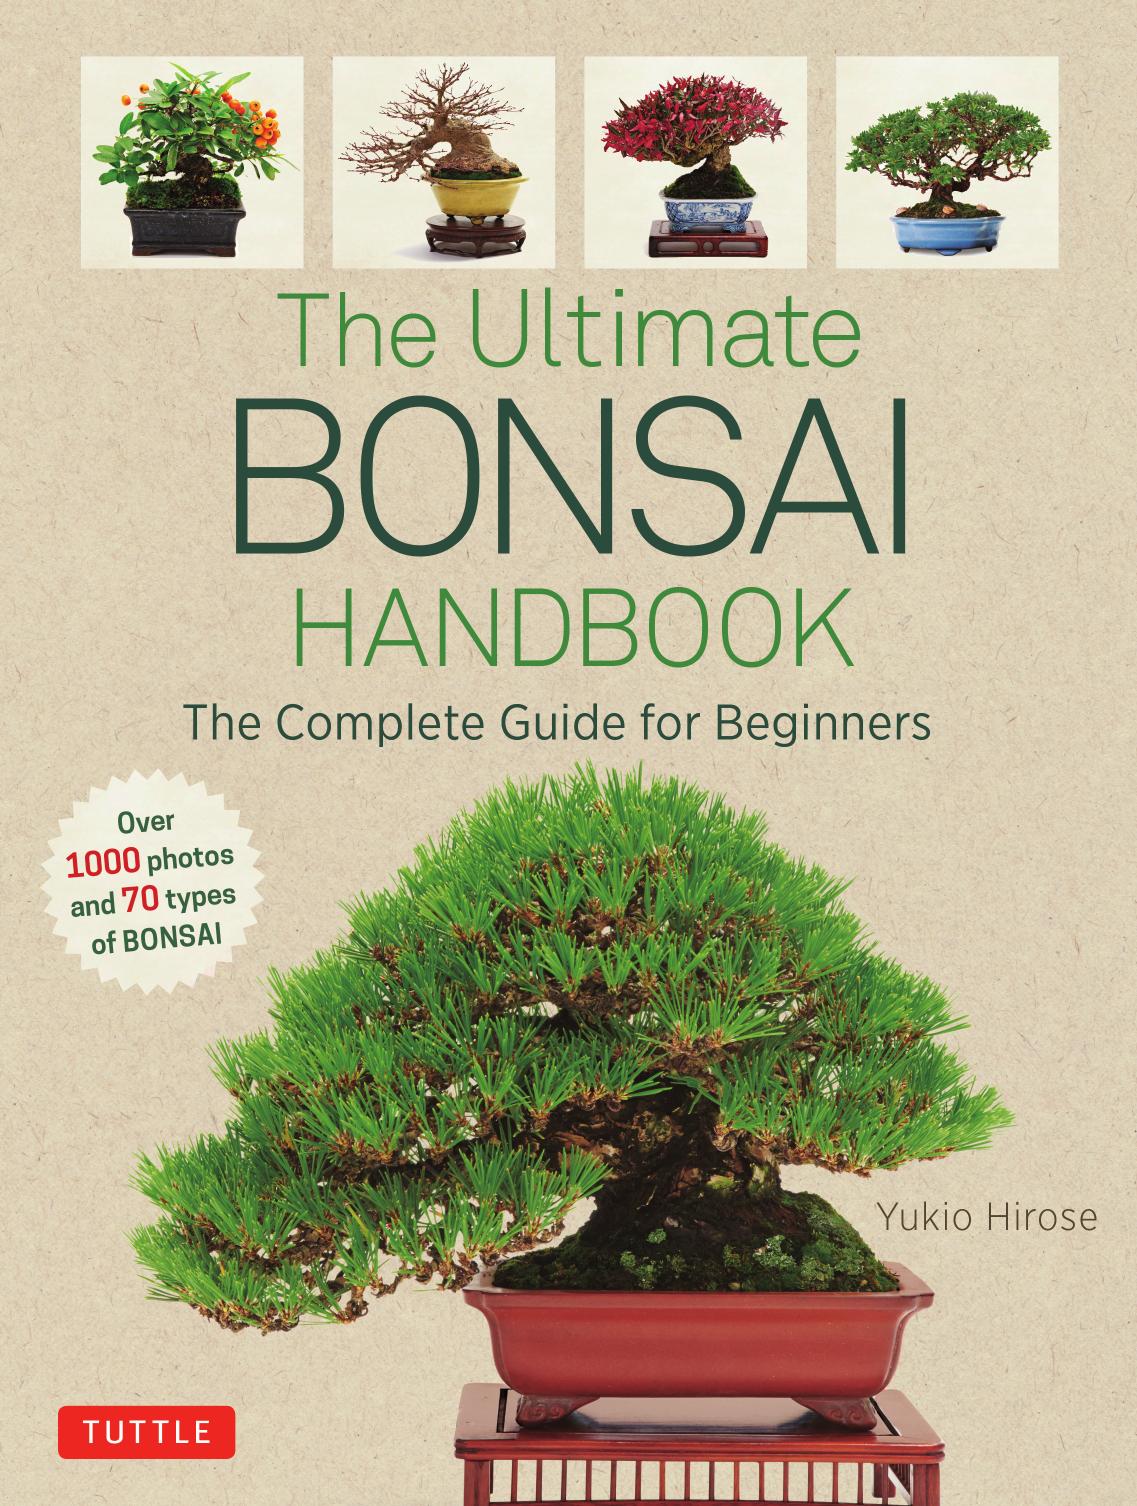 The Ultimate Bonsai Handbook by Yukio Hirose